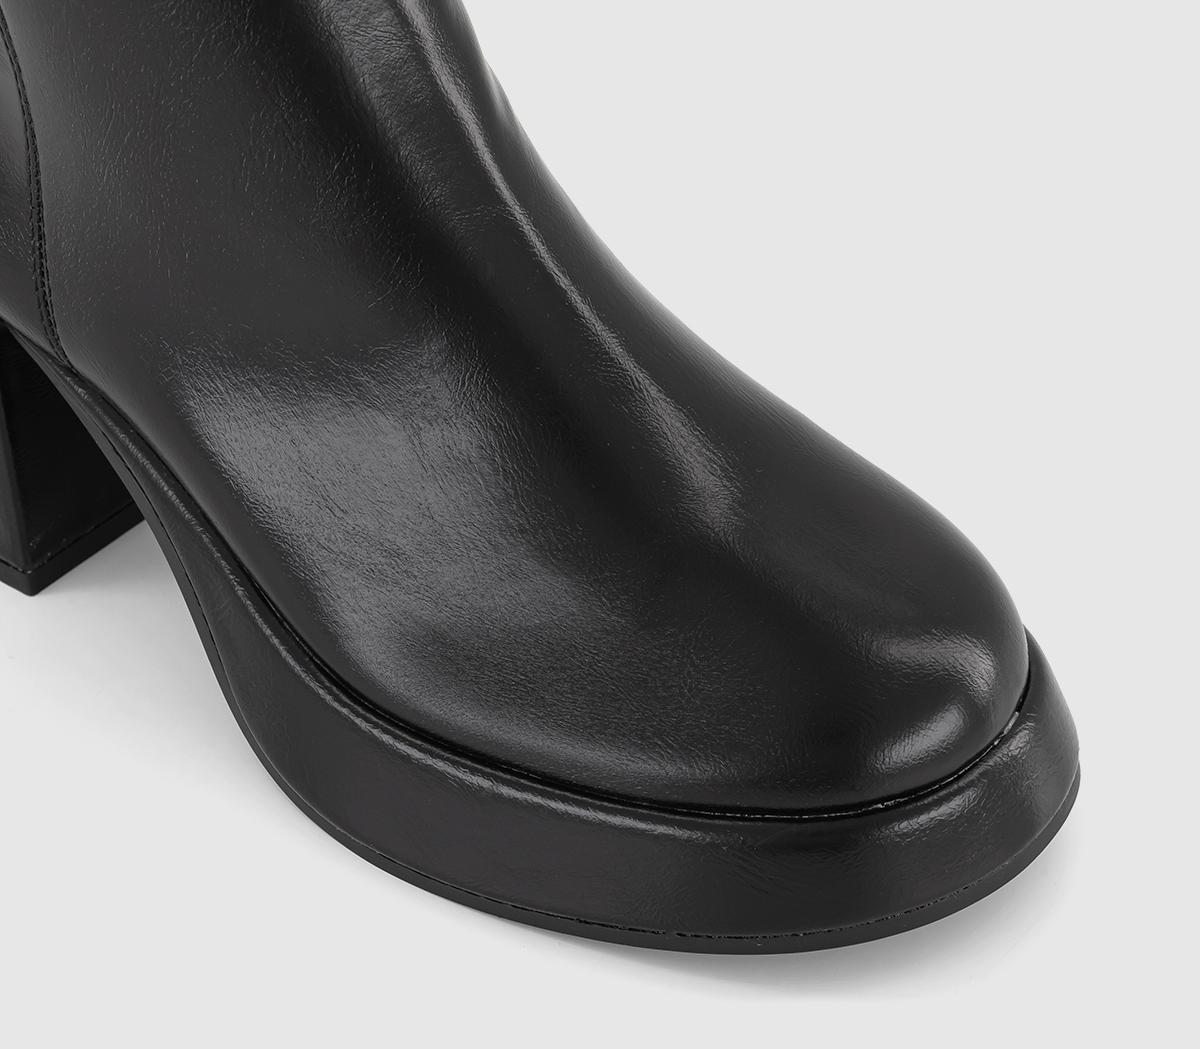 OFFICE Audio Square Toe Platform Boots Black - Women's Ankle Boots